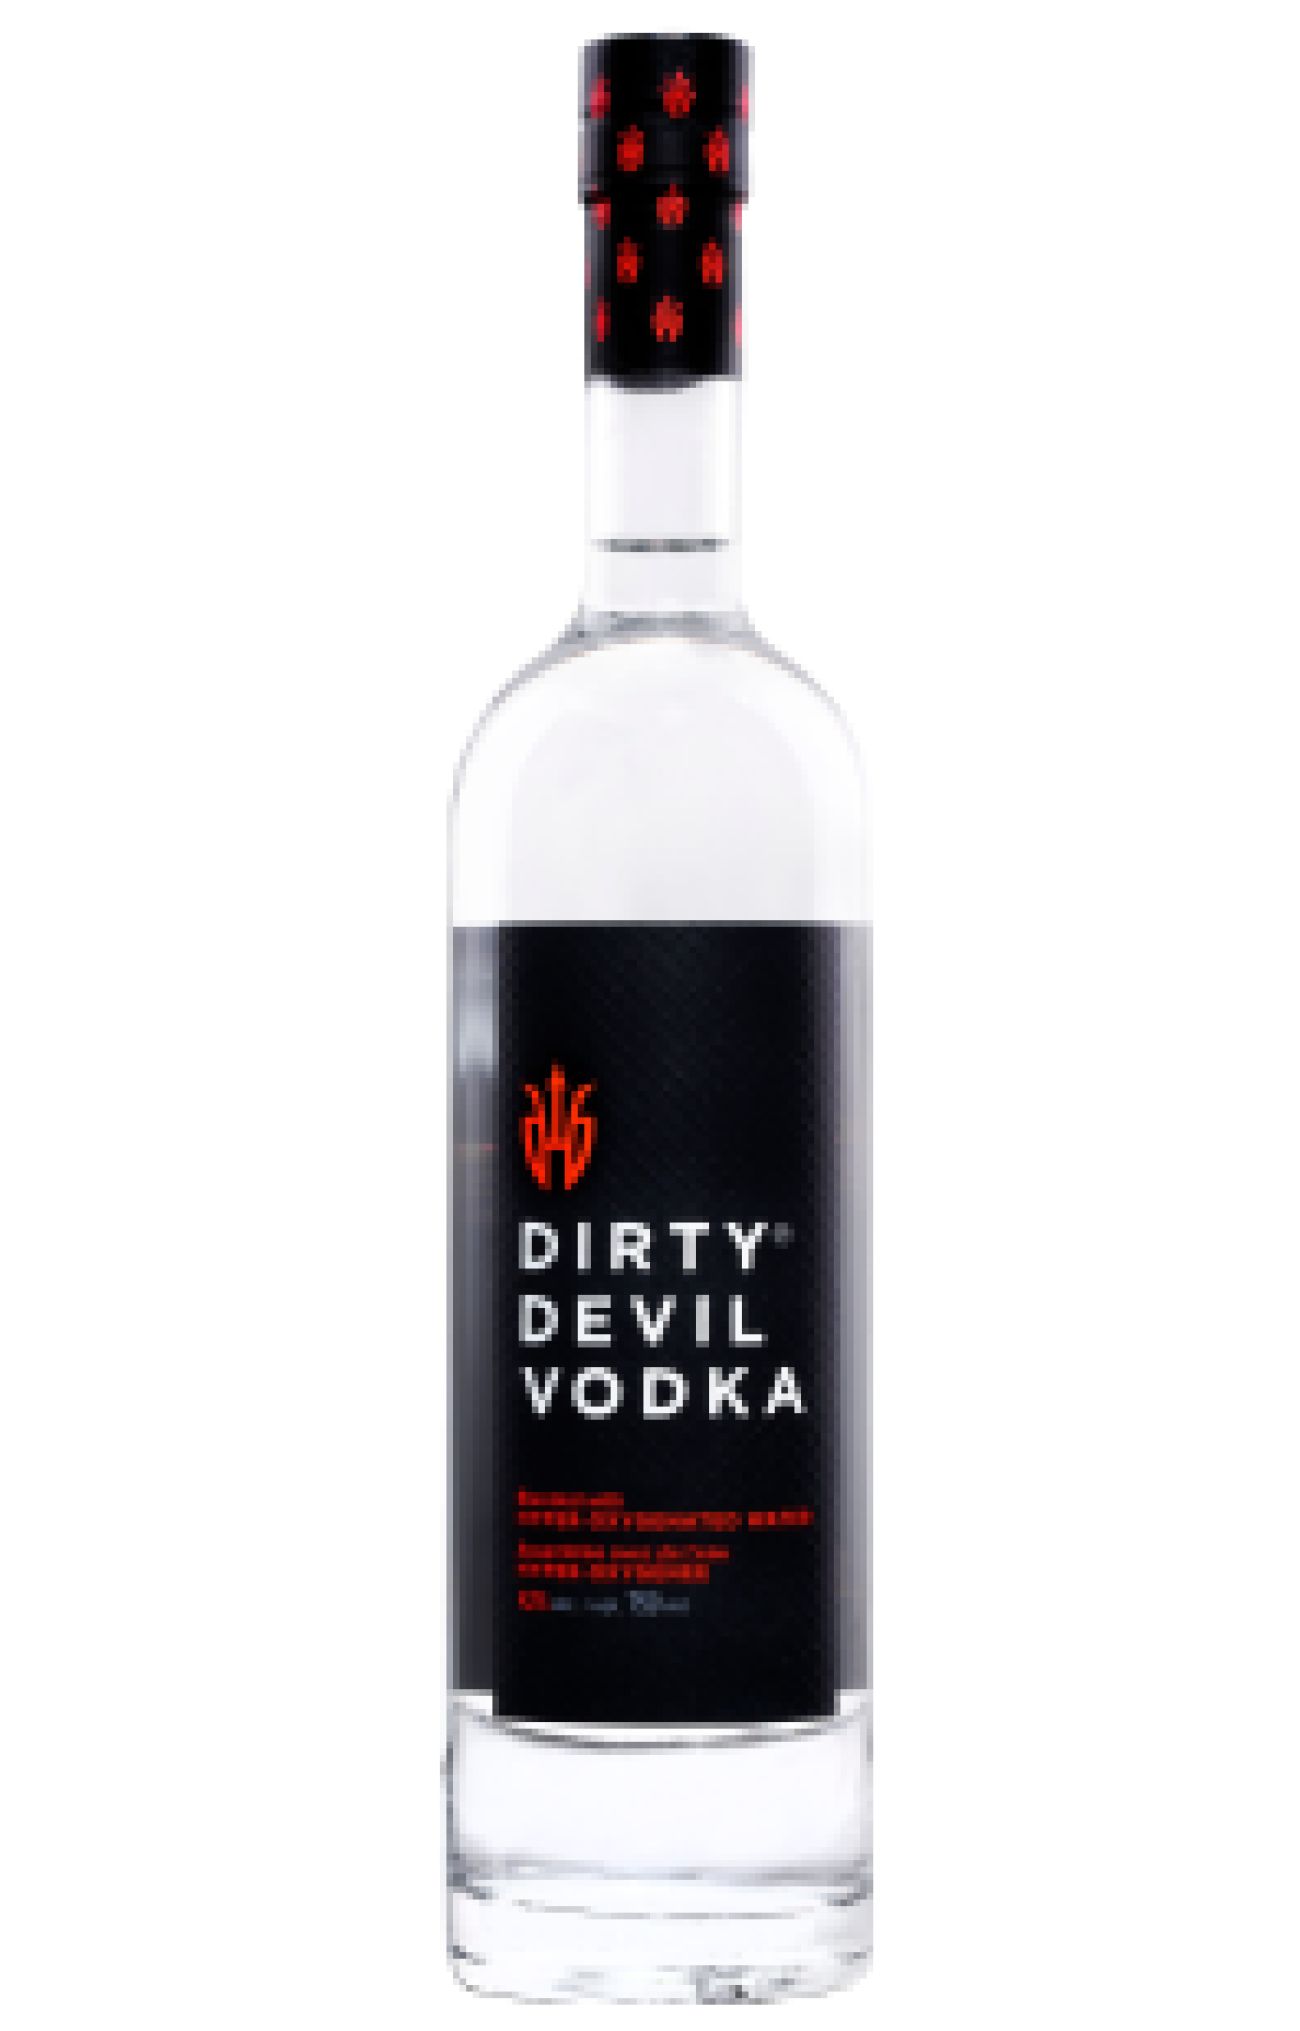 Dirty Devil vodka